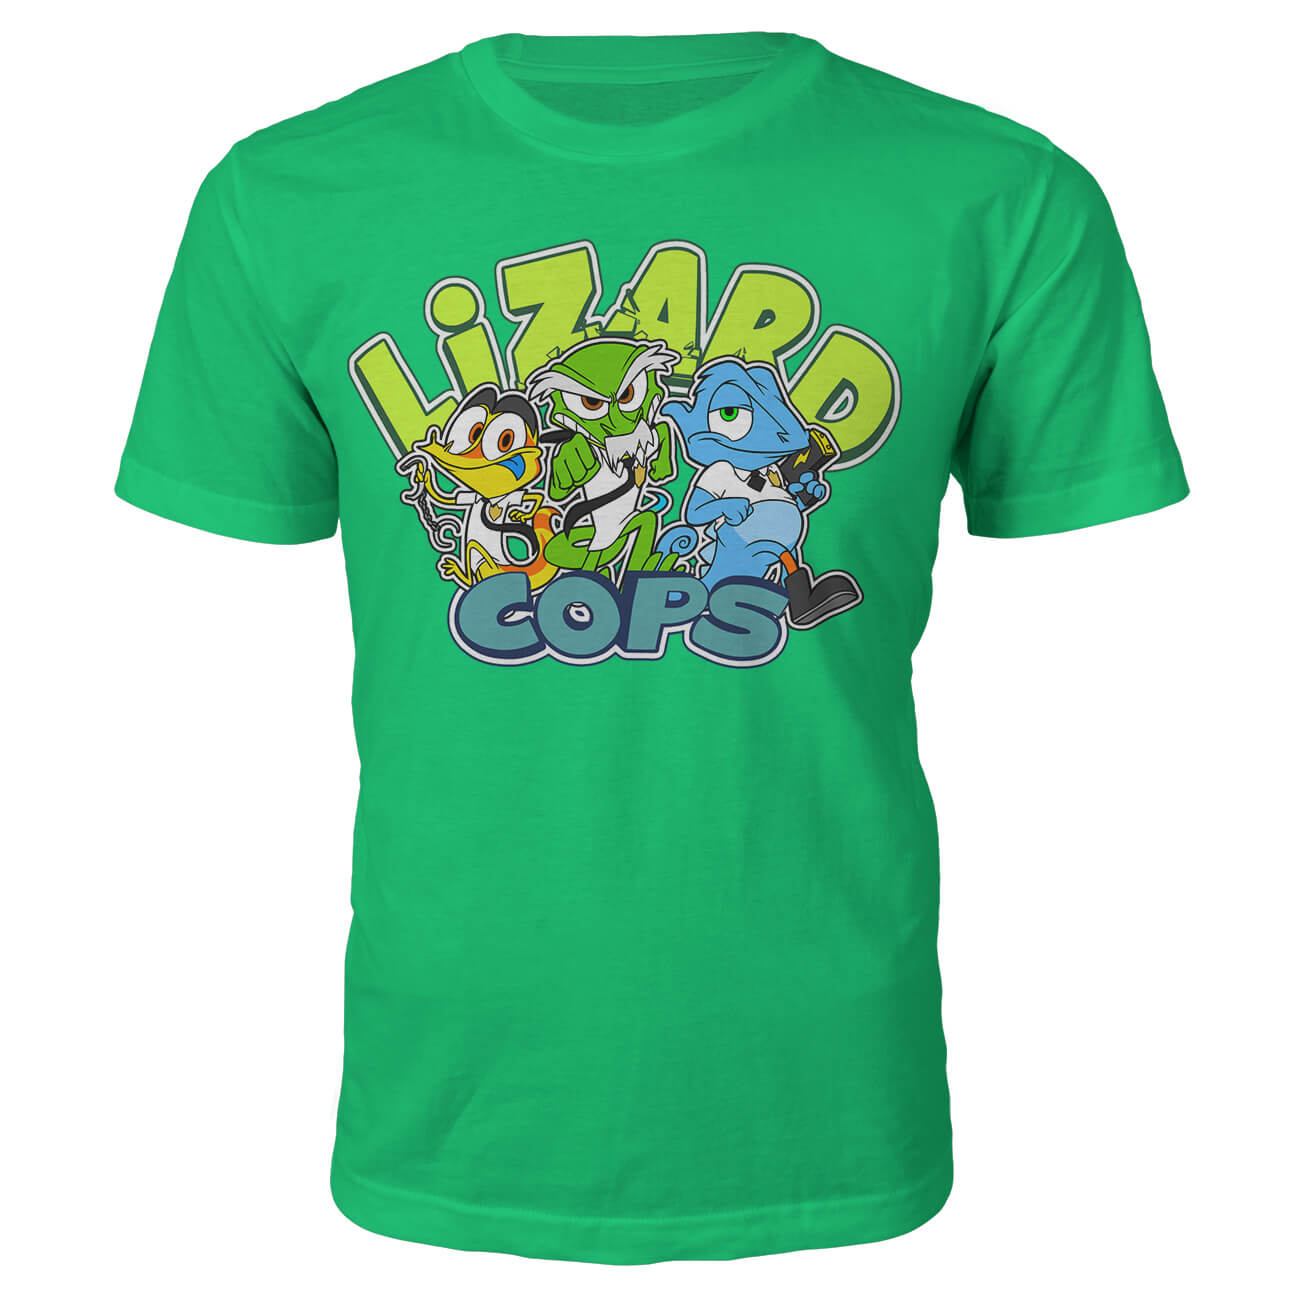 Lizard Cops T Shirt Kids Xl 12 13 Years Green